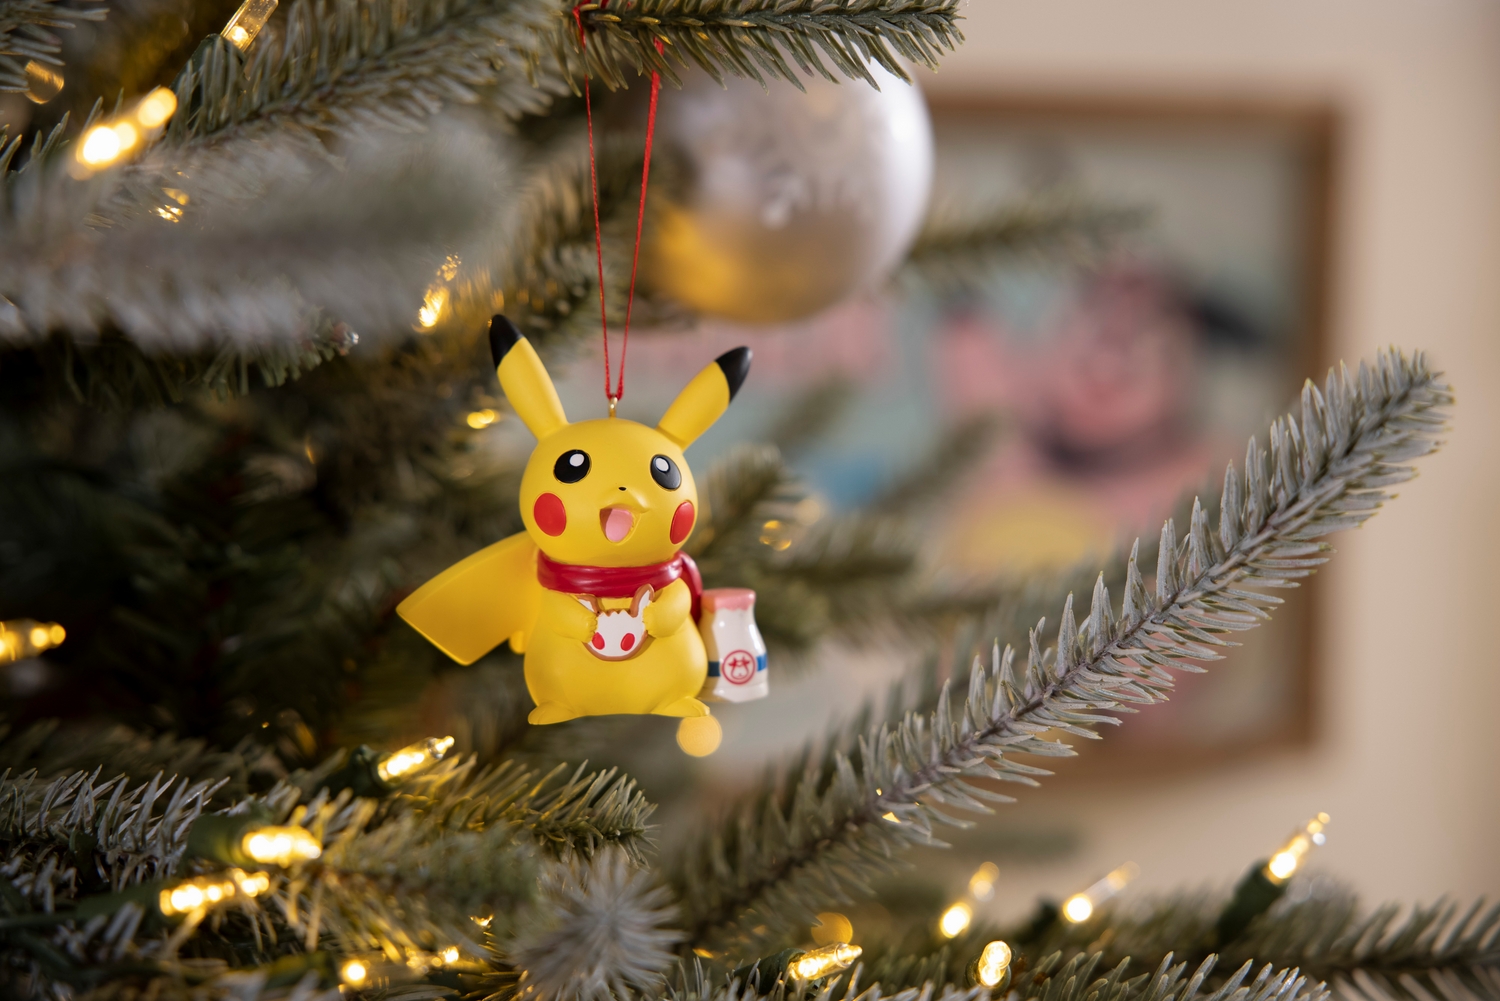 Pokemon_Holiday_Home_Ornament_(Pikachu)_Lifestyle_Image.jpg